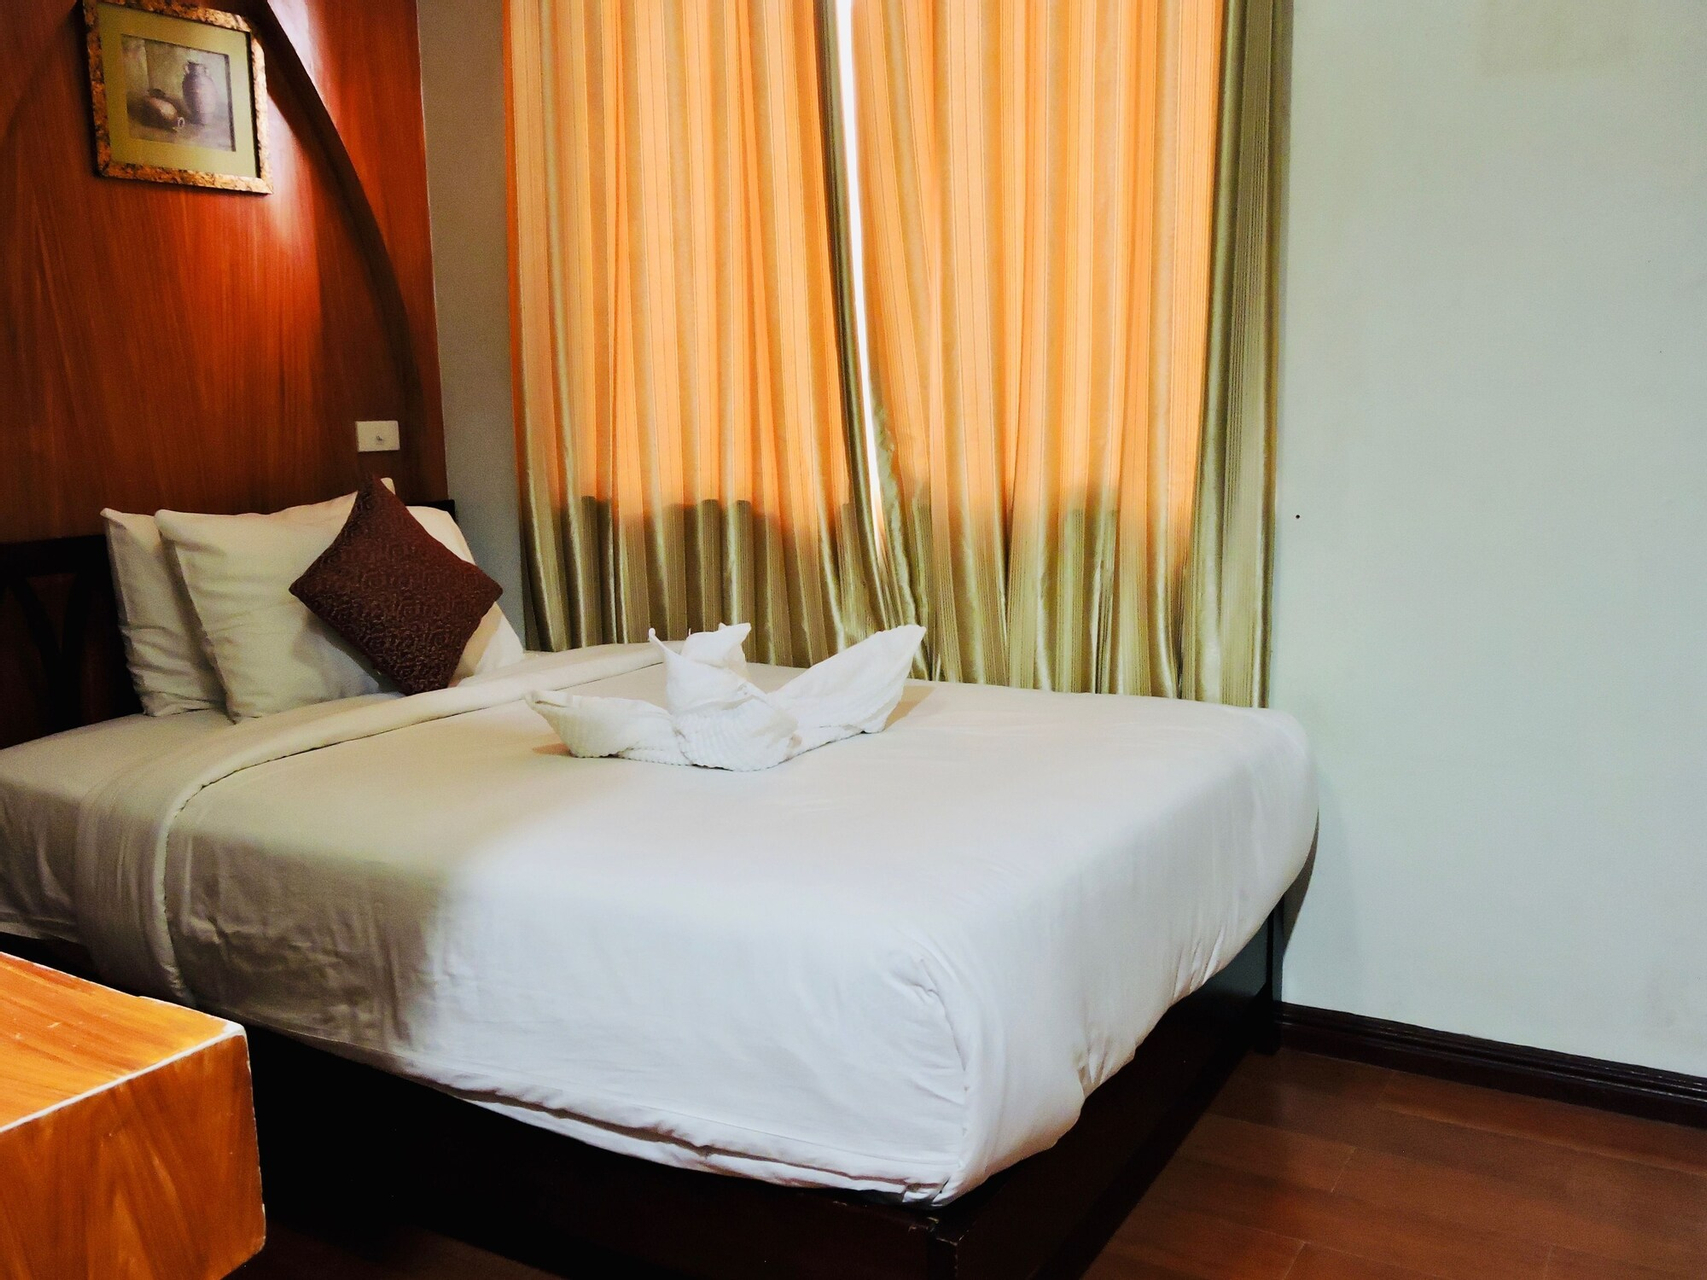 Room 5, Tinhat Boutique Hotel and Restaurant, Davao City